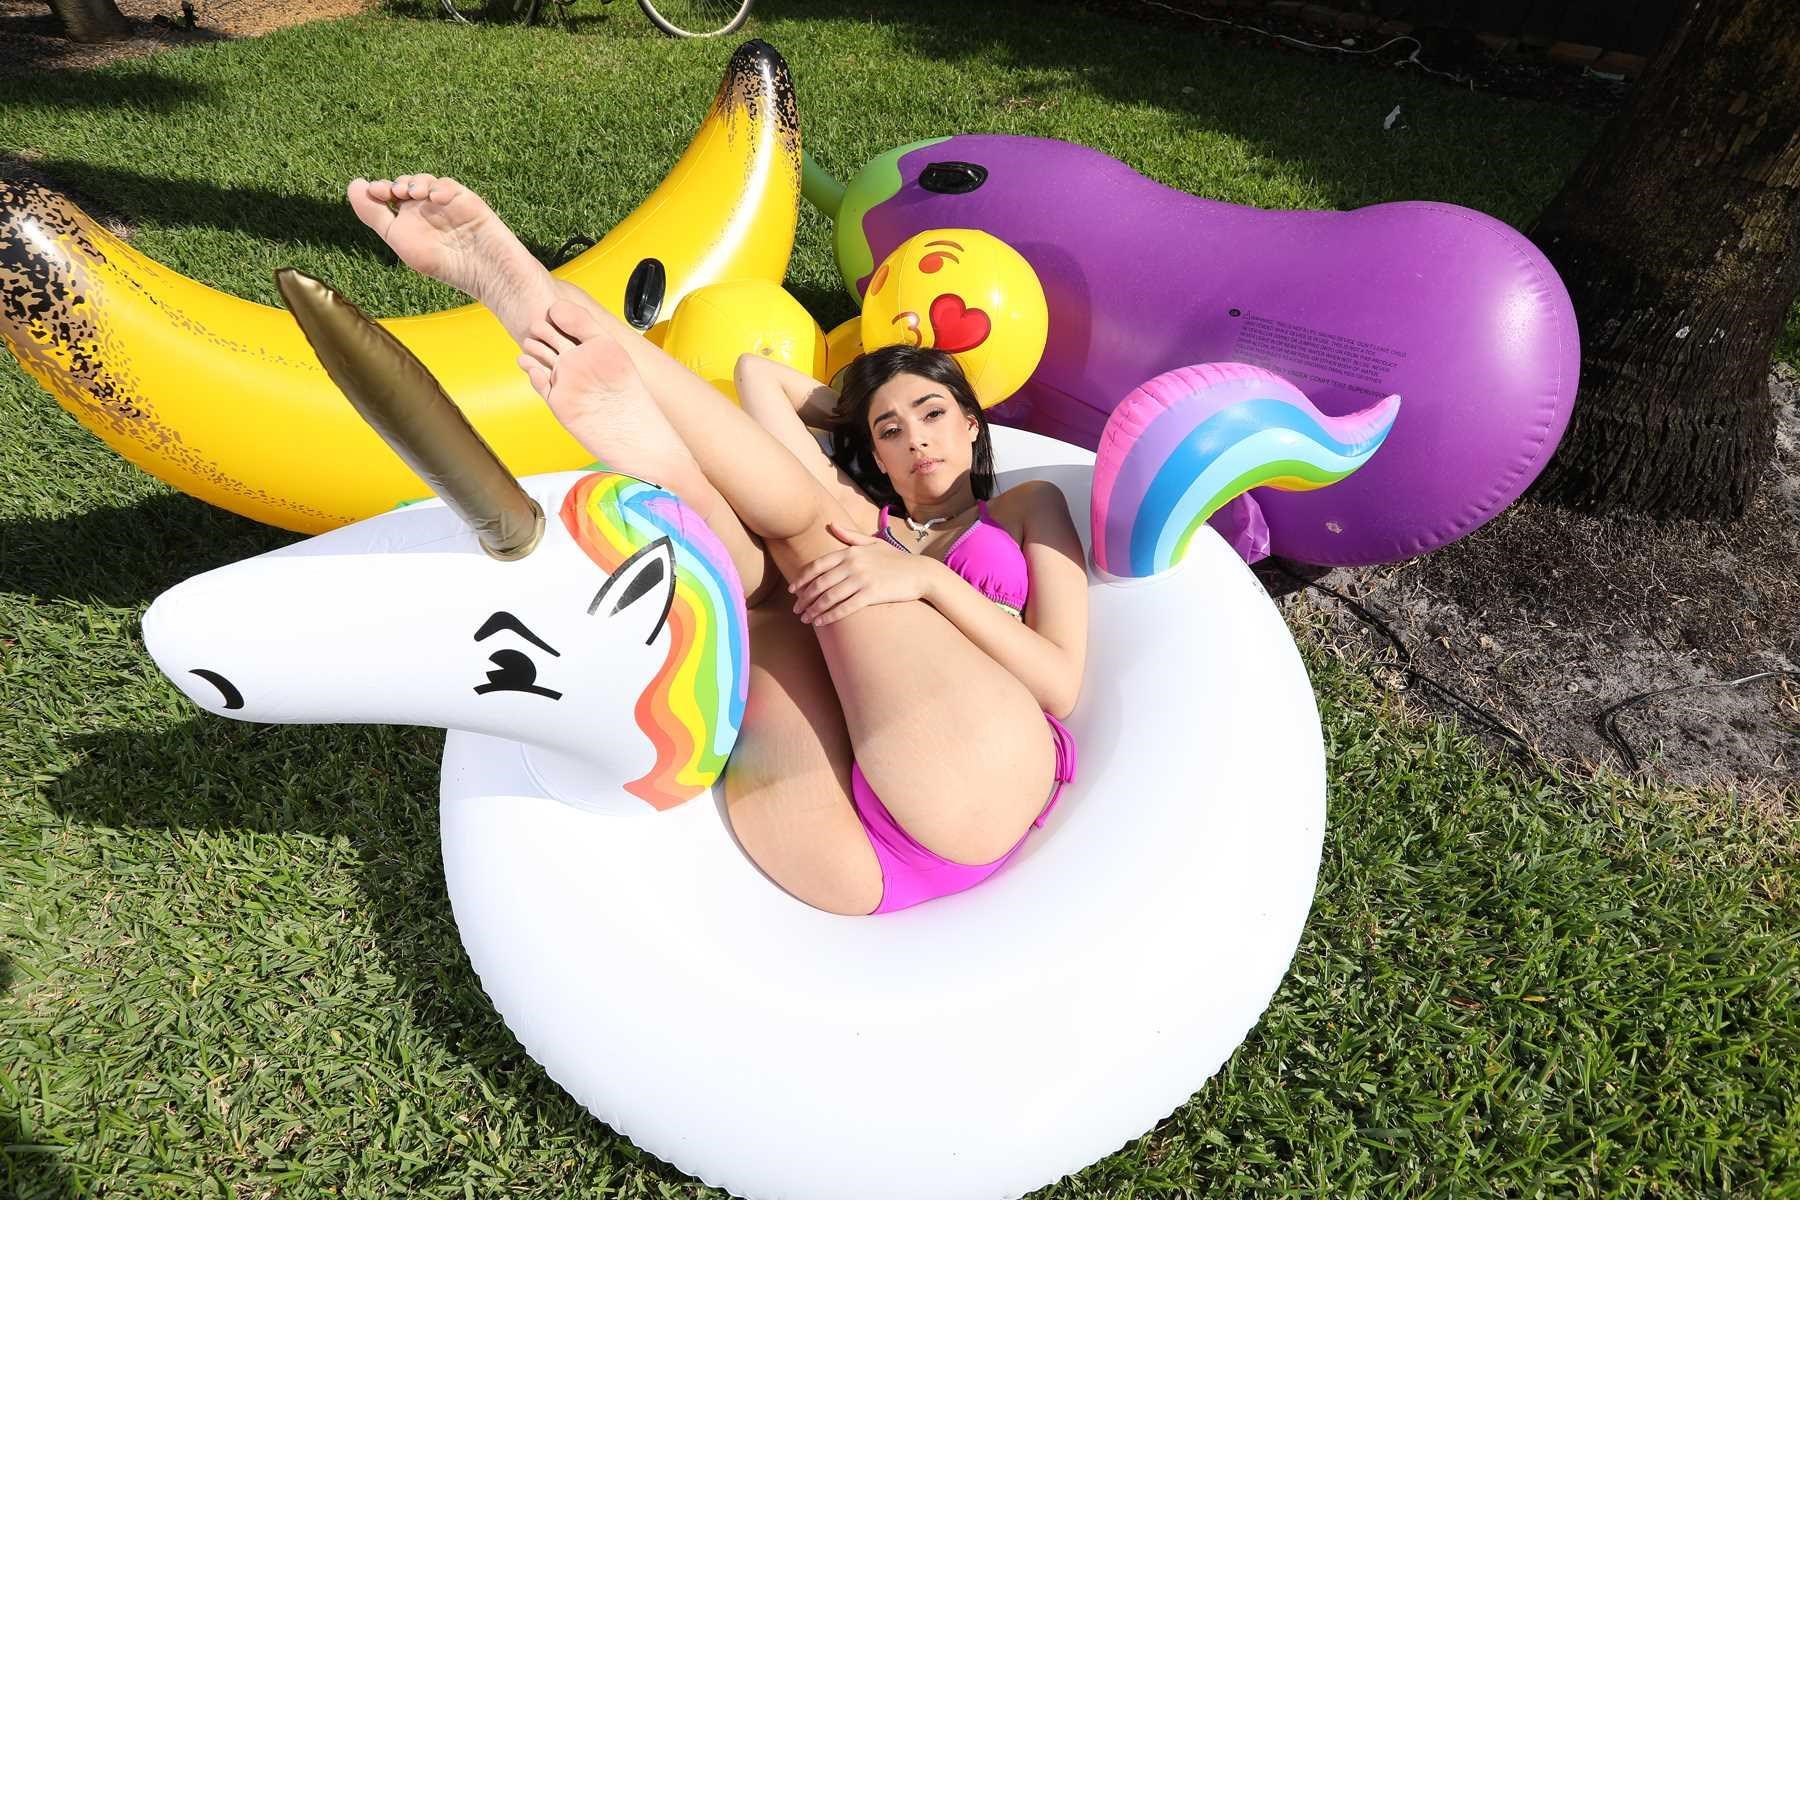 Brunette female posed wearing bikini lounging in float toy